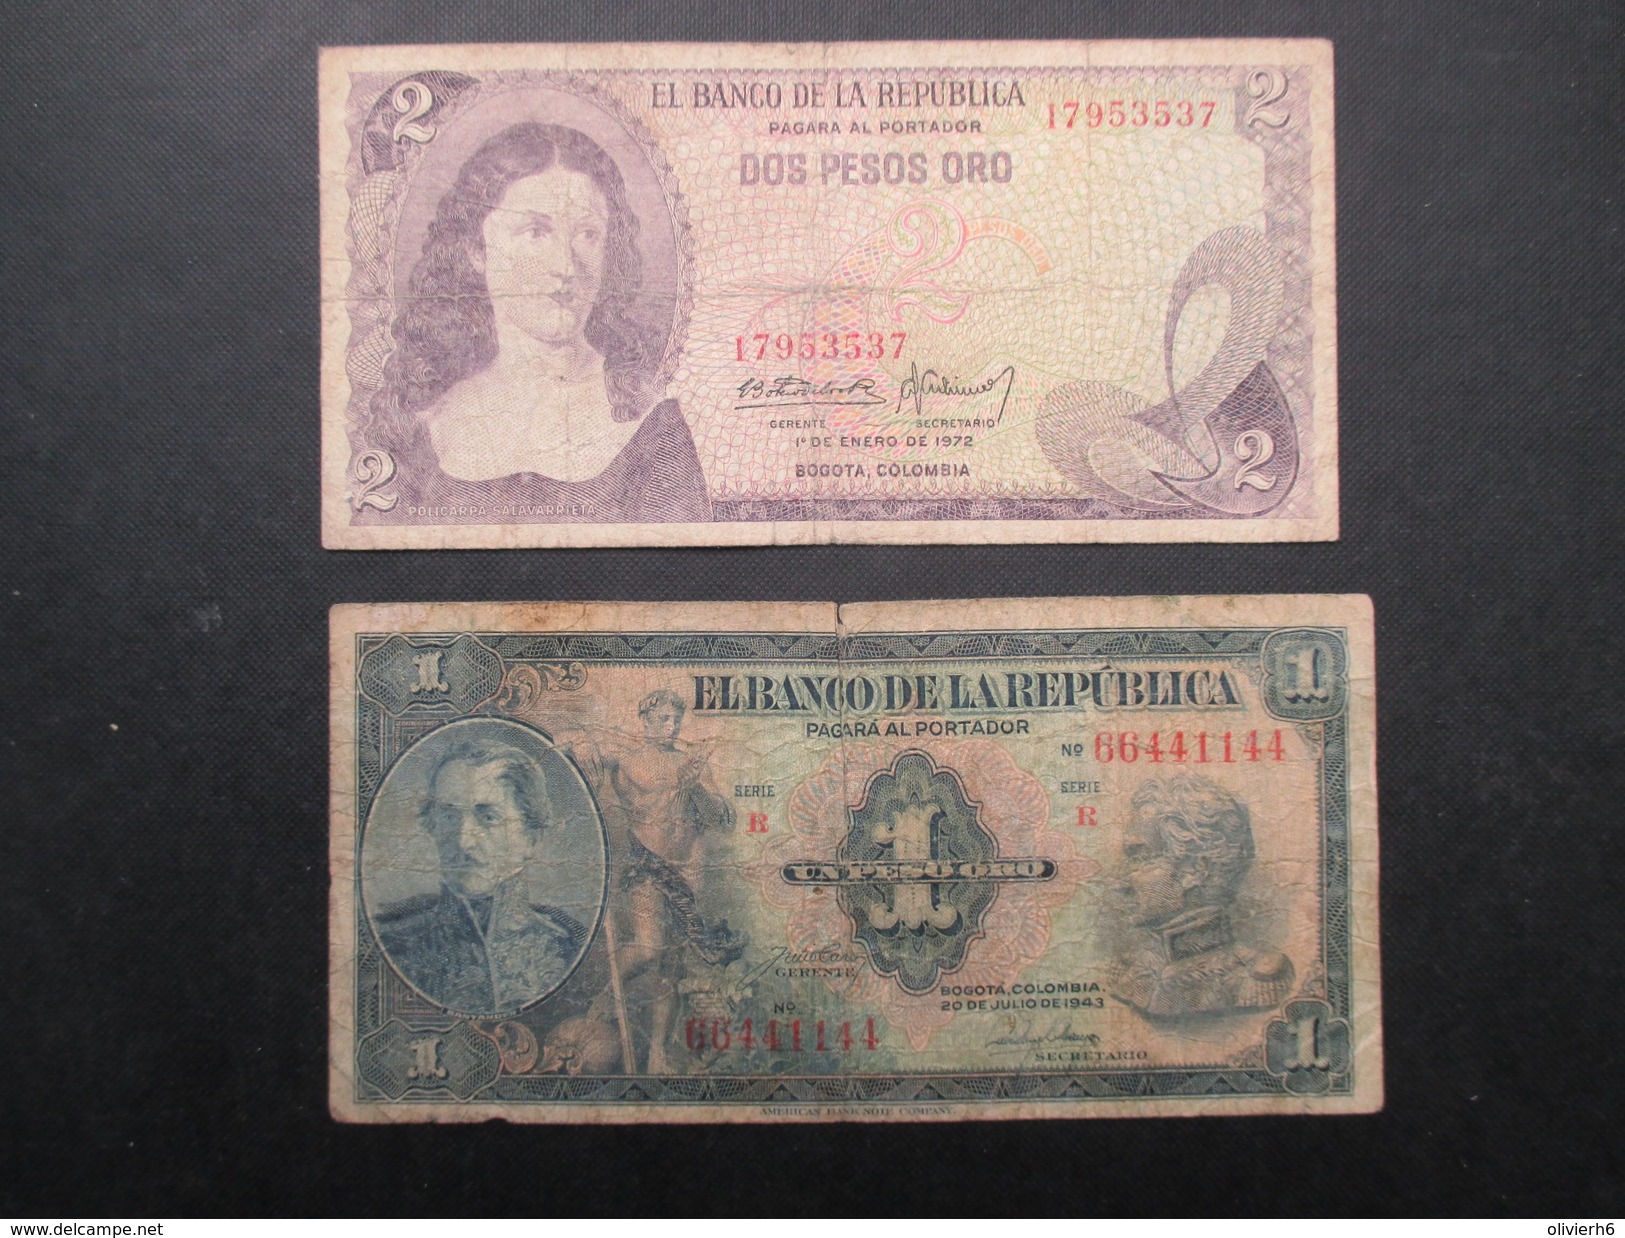 LOT 5 BILLETS COLOMBIE (V1719) 4 x 1 peso oro & 1 x 2 pesos oros (8 vues) BANCA DE LA REPUBLICA BOGOTA COLOMBIA